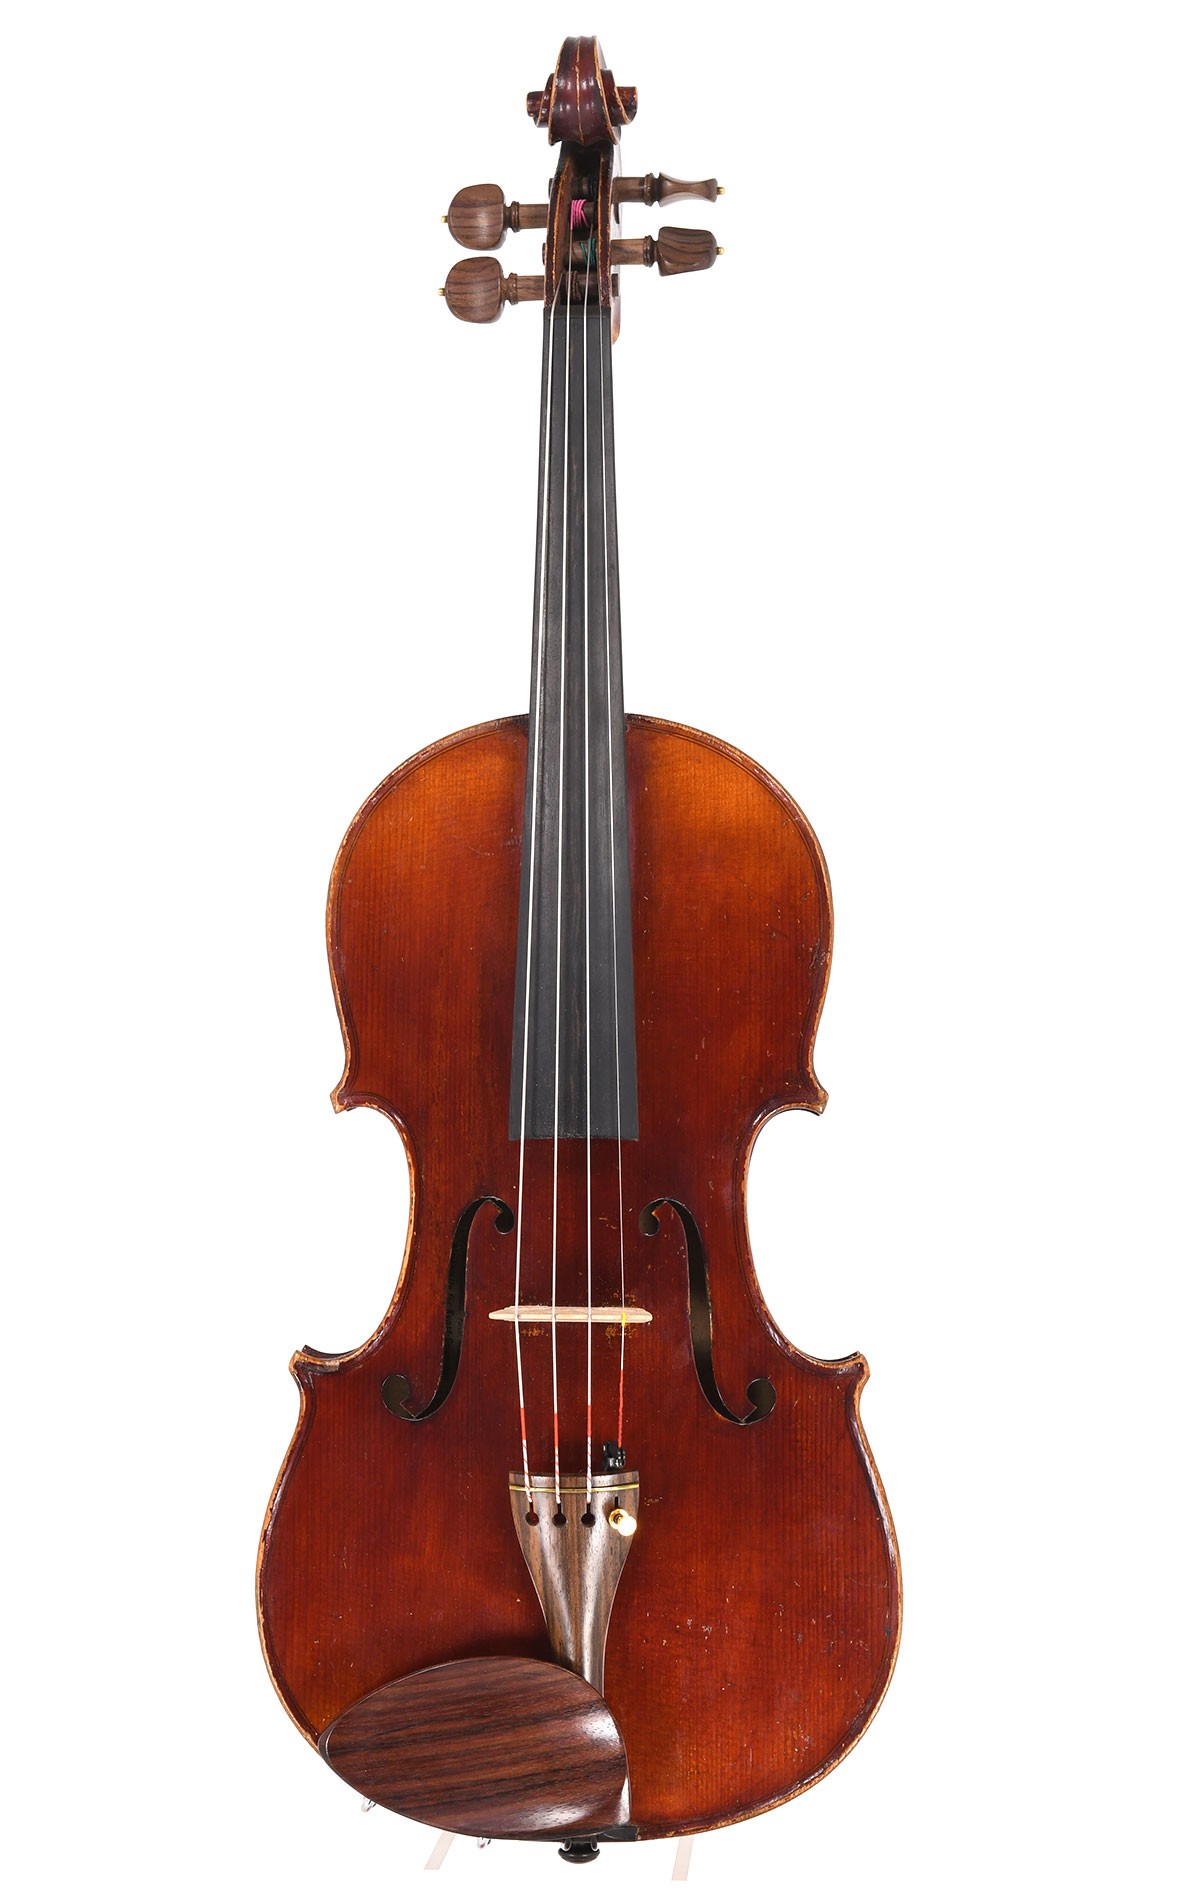 Mittenwald violin from the stock of Eugen Gärtner, Stuttgart